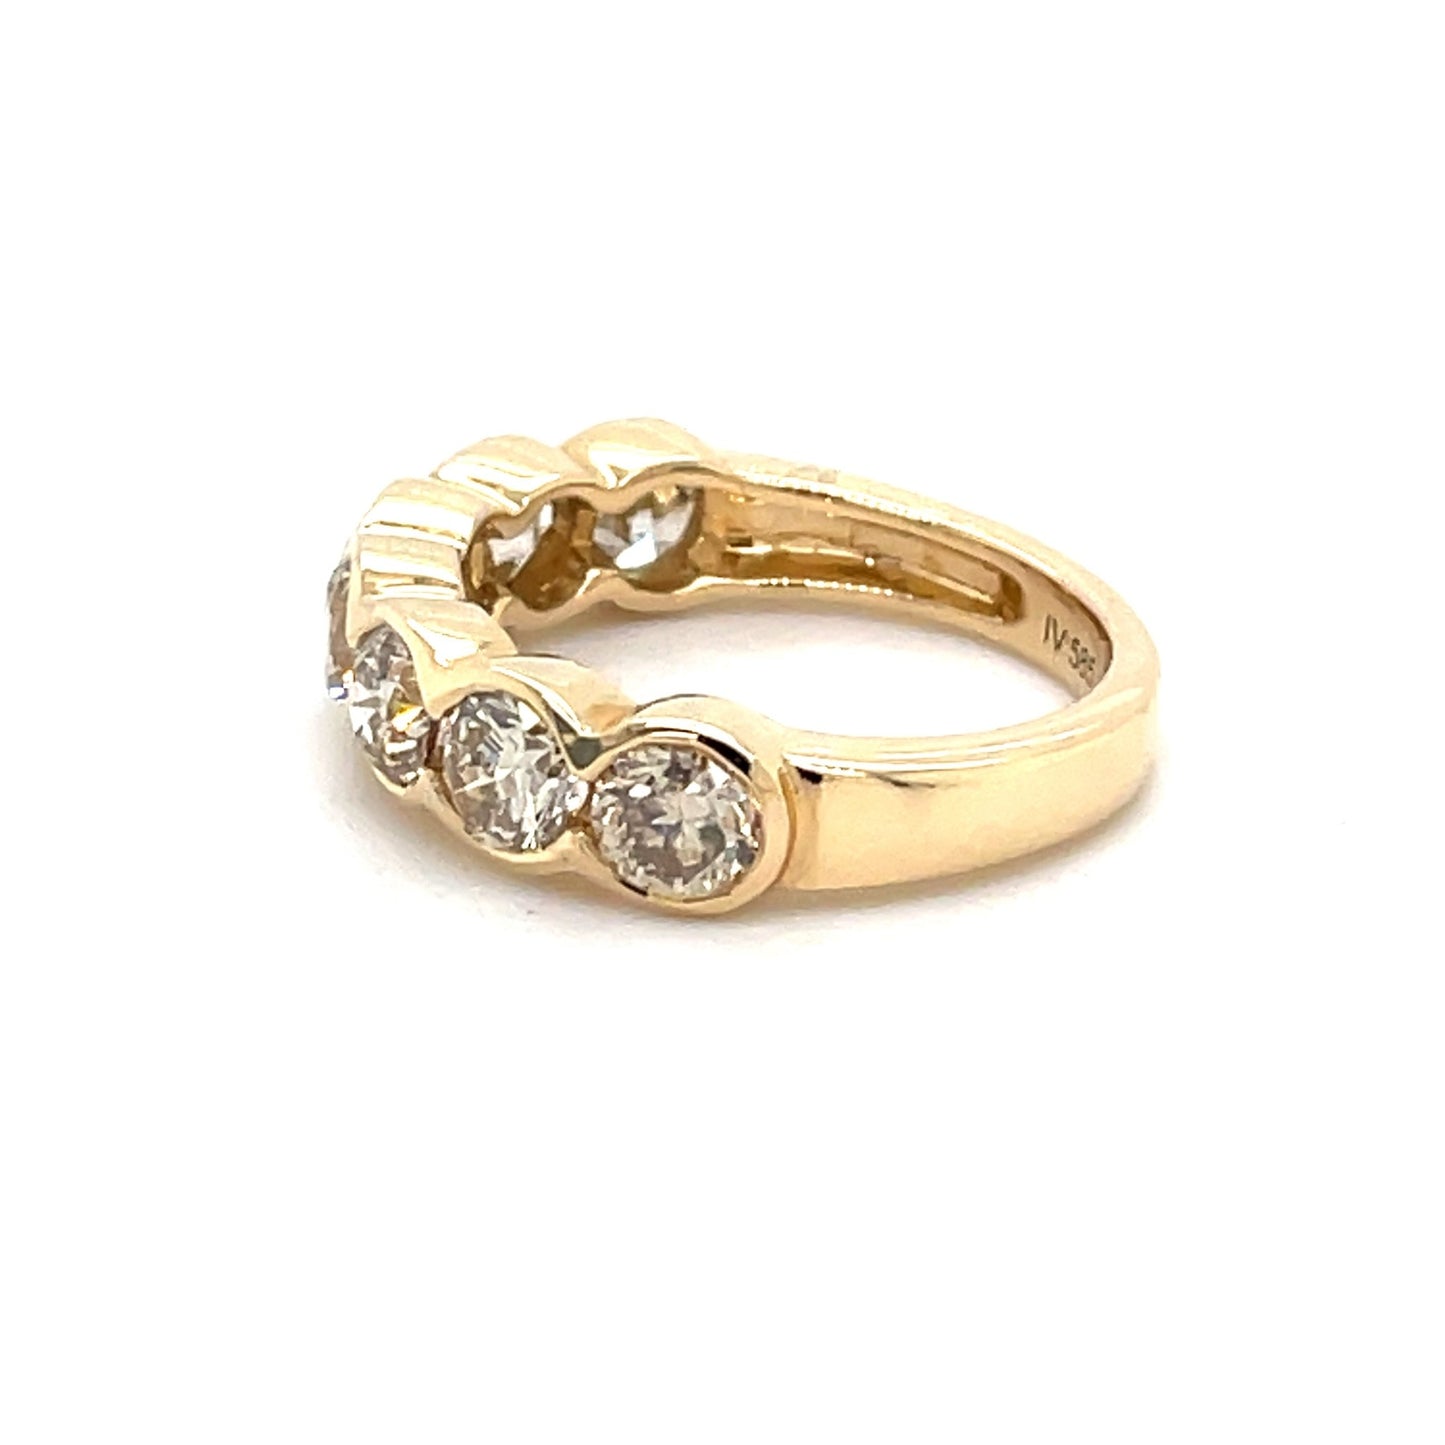 Ring mit 7 Brillanten ca. 1,5 ct in Gold 585 - JUWEL1